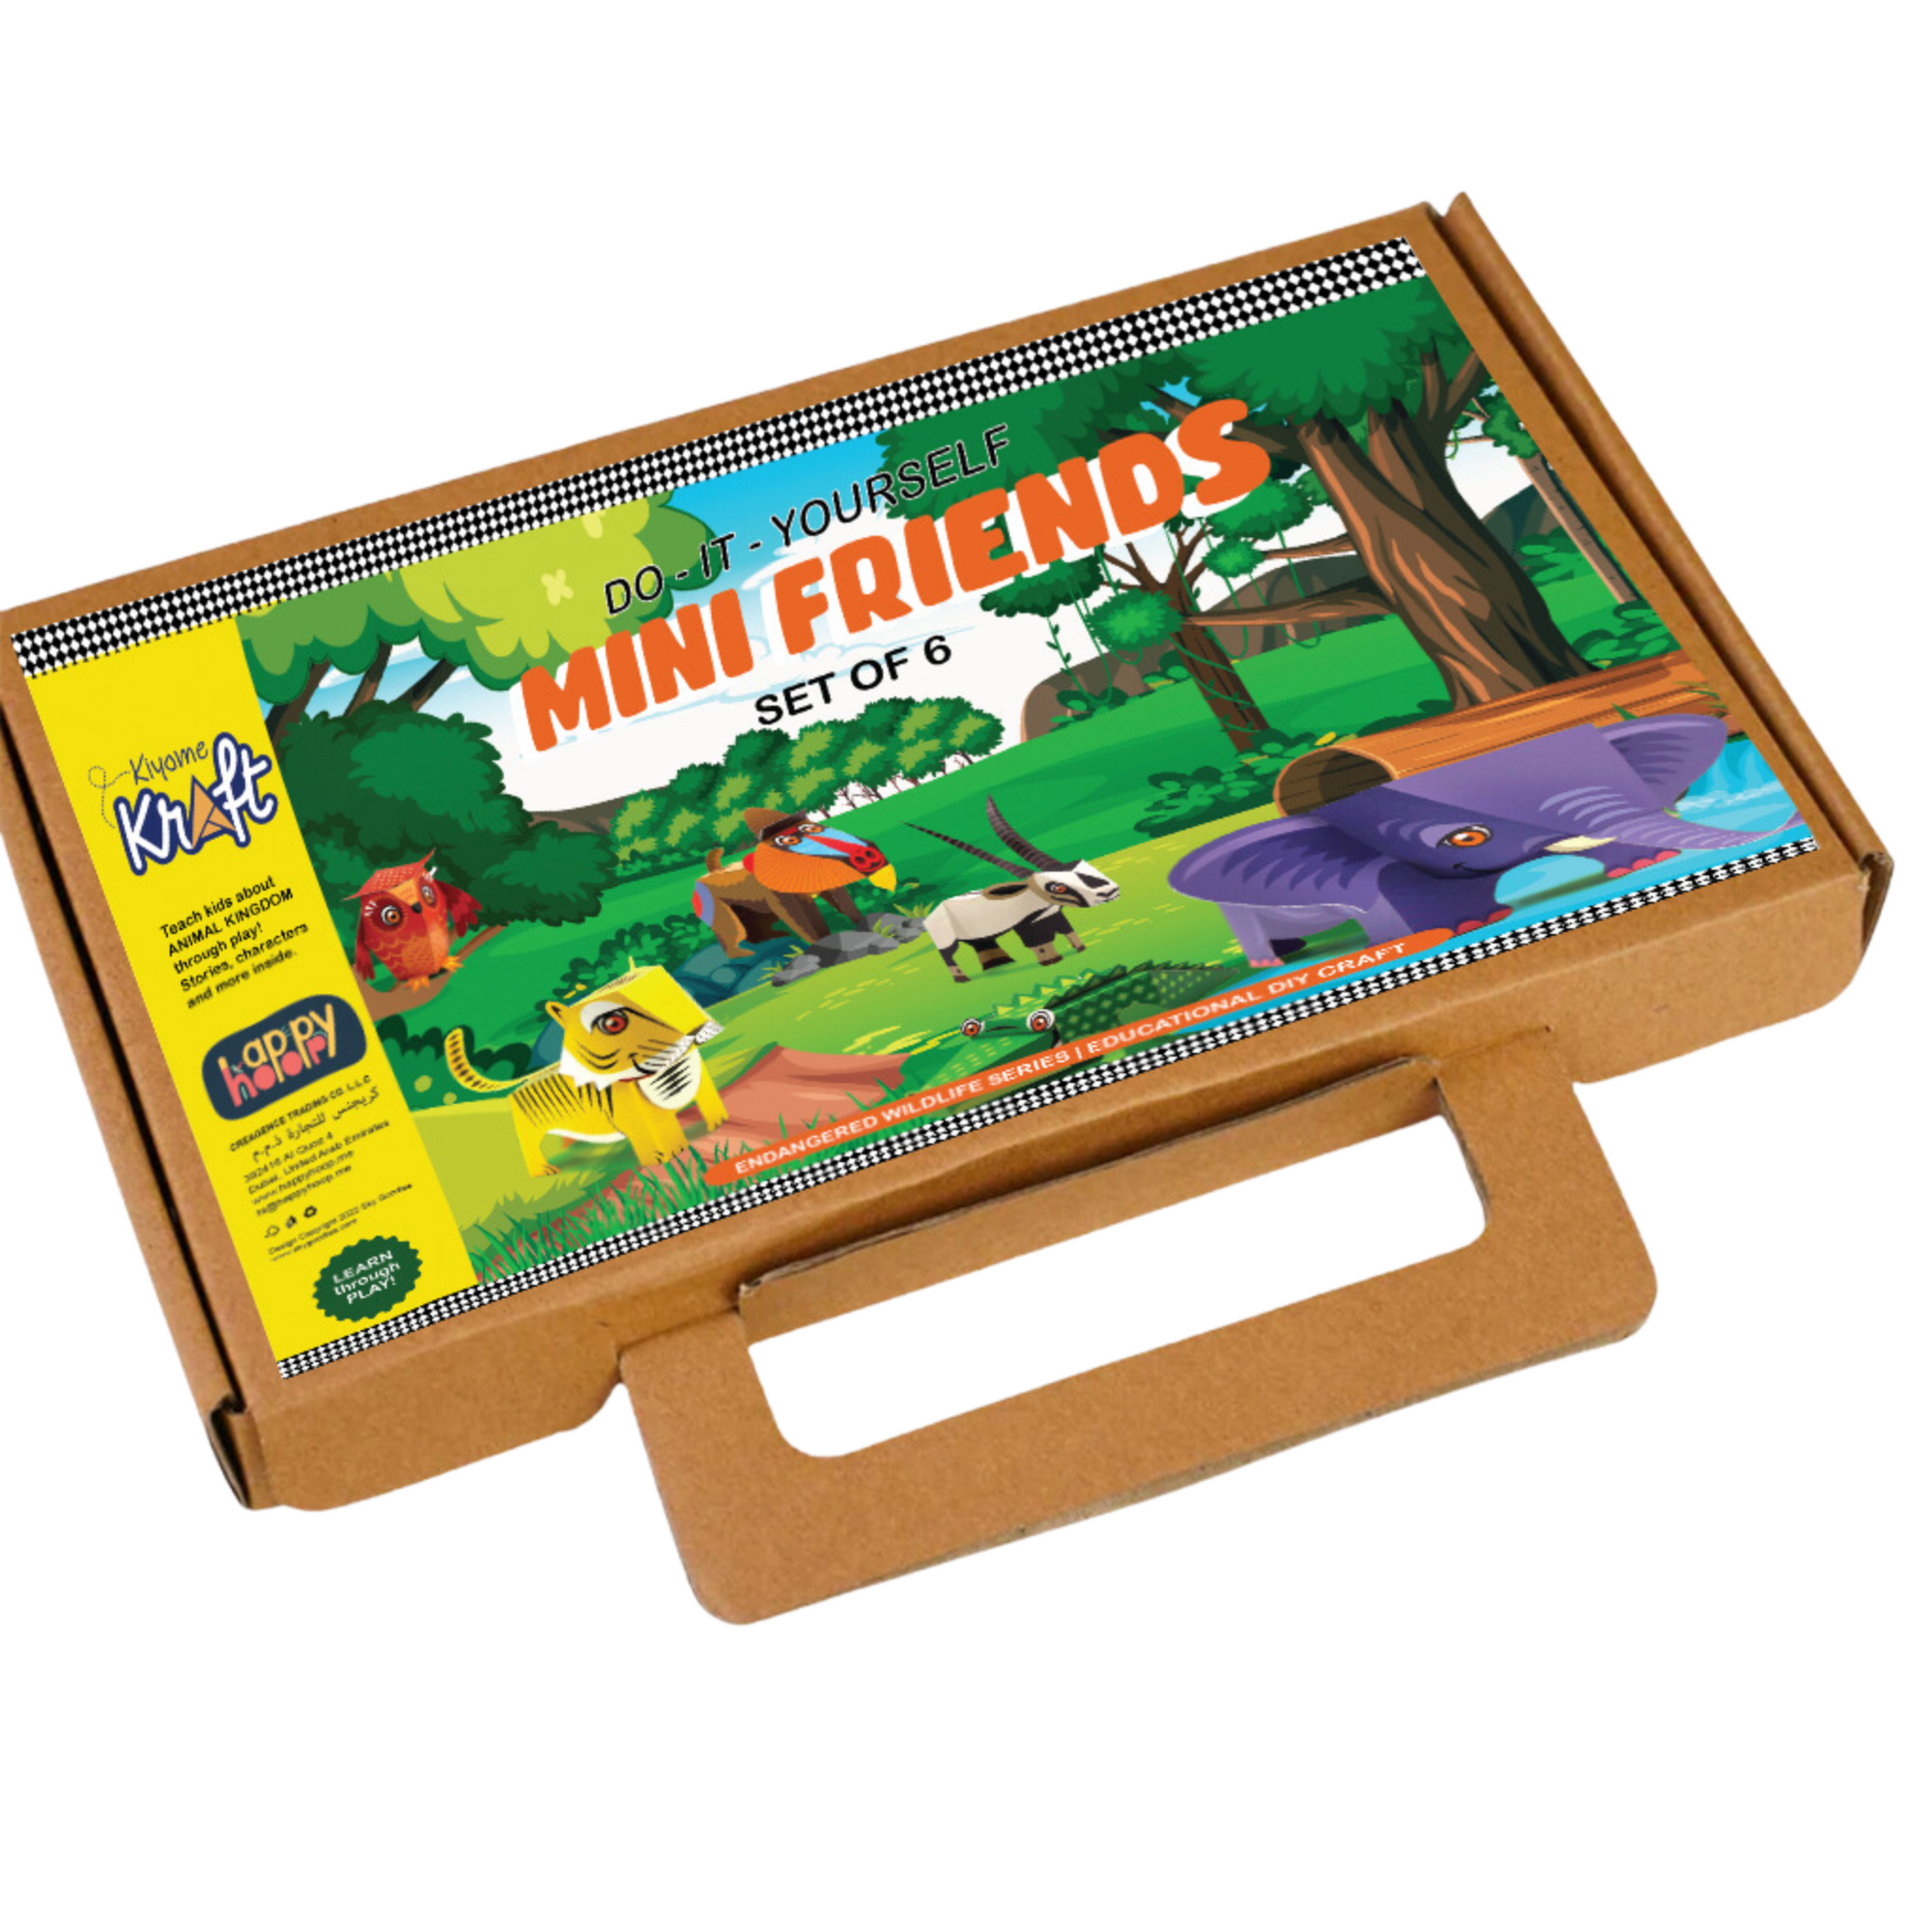 DIY Mini Friends: Box Set of 6 Endangered Animals : Set 1